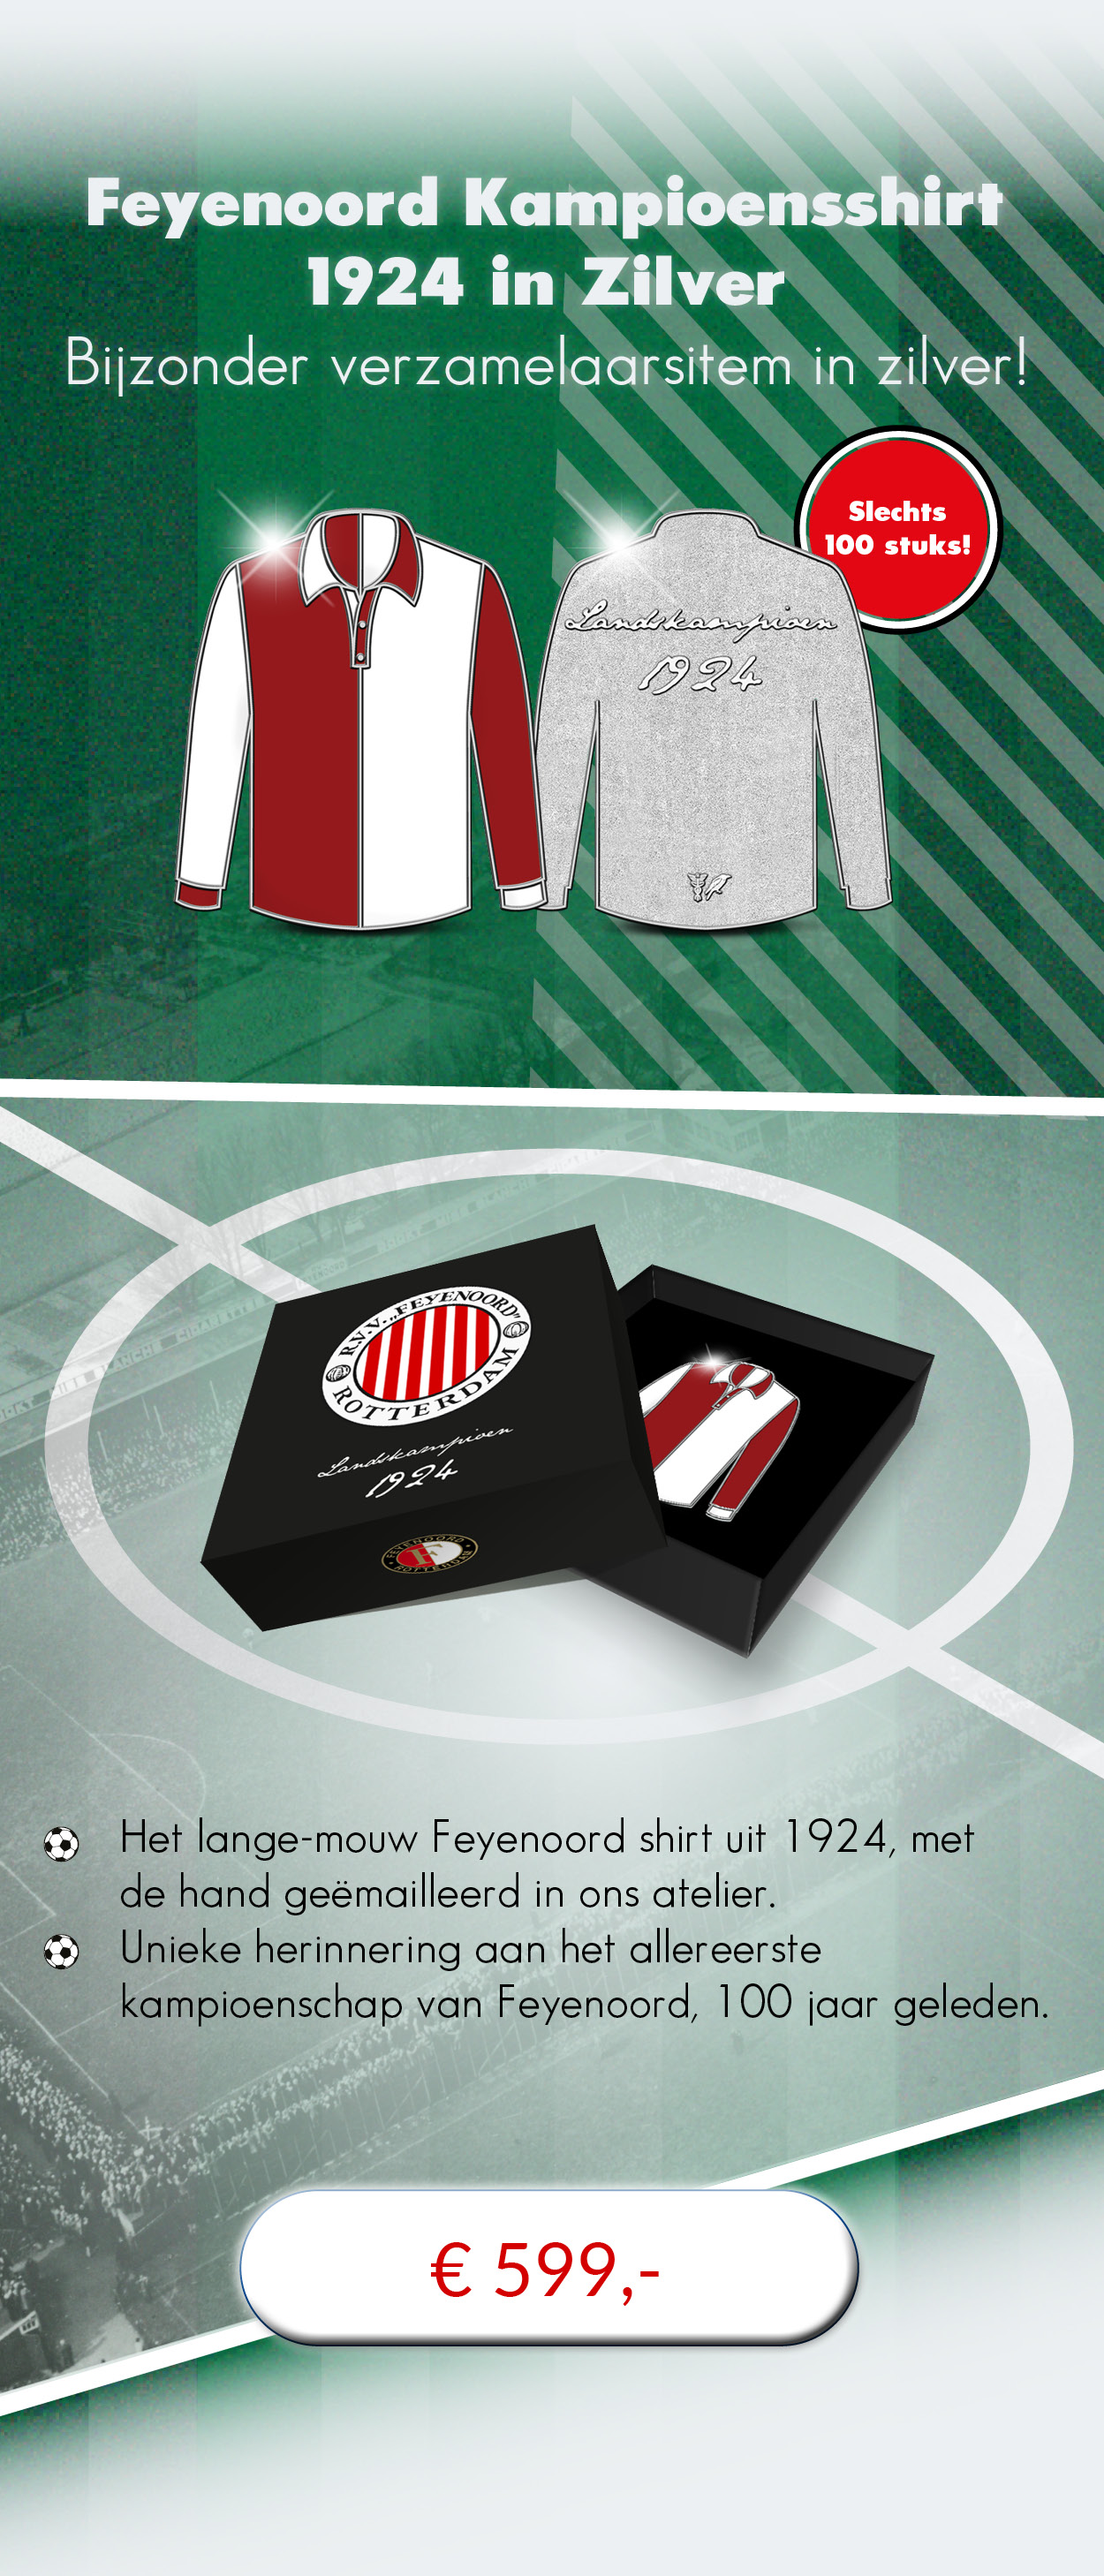 Feyenoord Kampioensshirt 1924 in Zilver